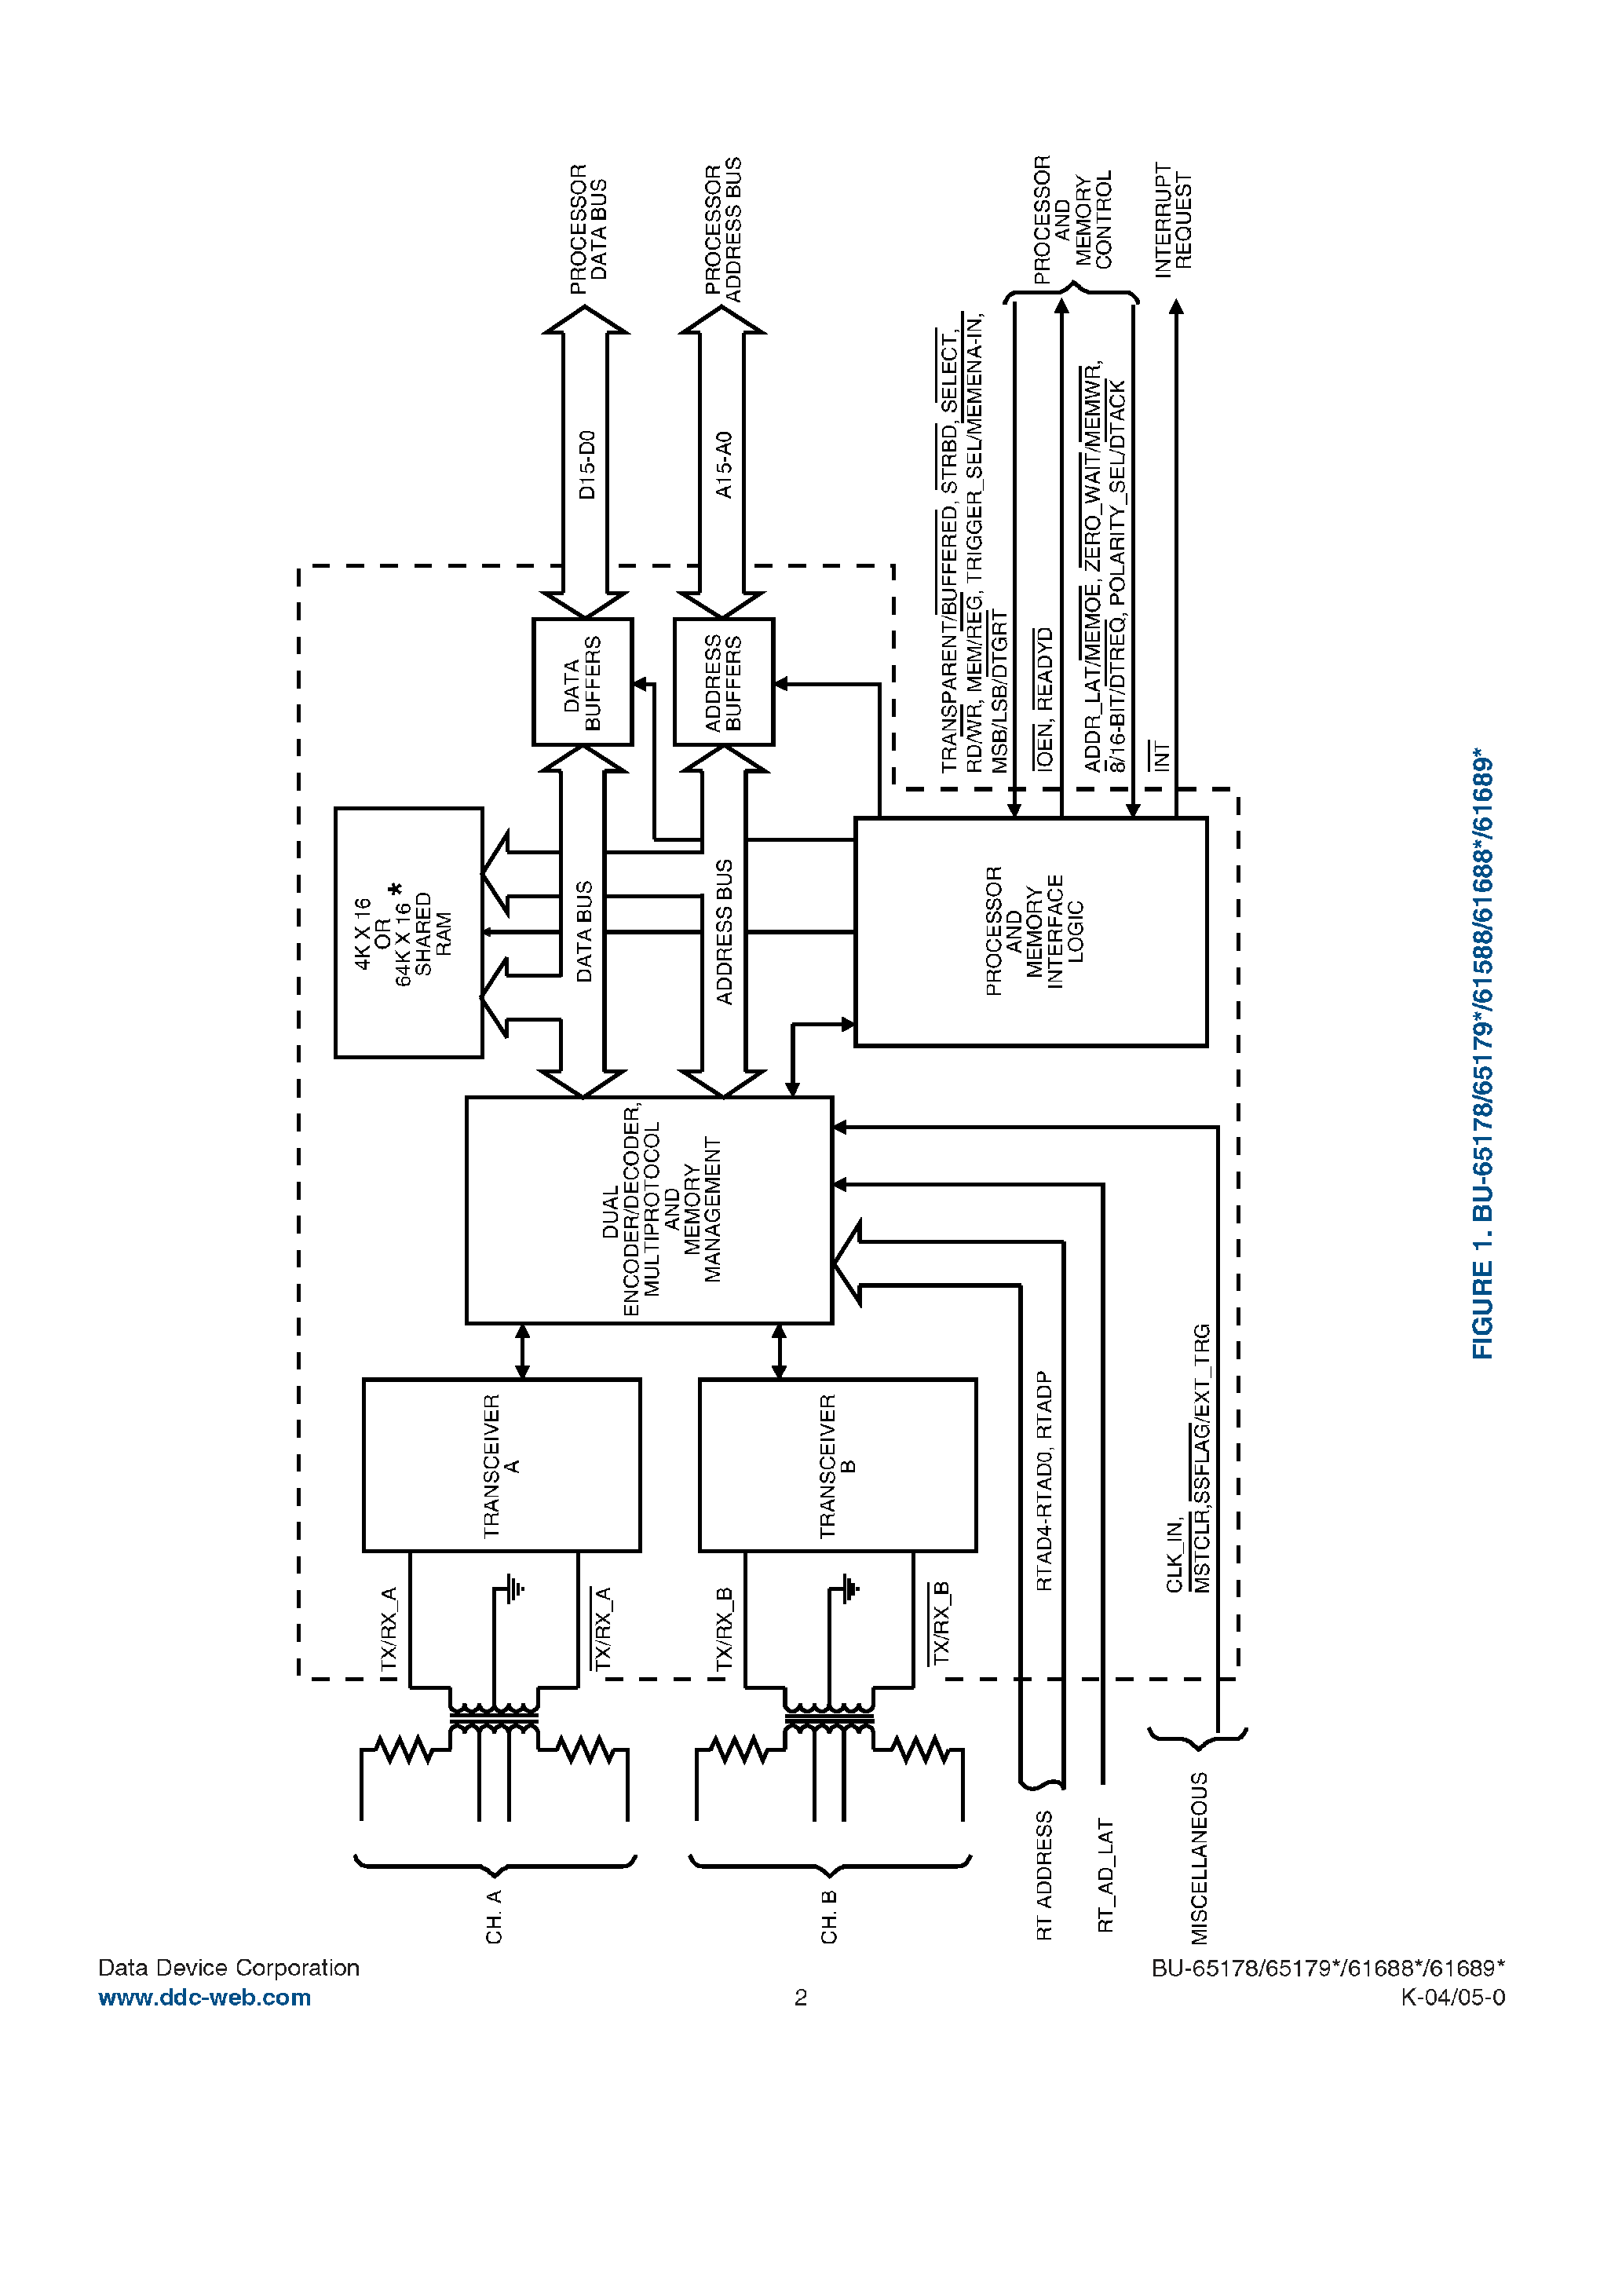 Даташит BU-61689 - Miniature Advanced Communication Engine and Mini-Ace Plus страница 2